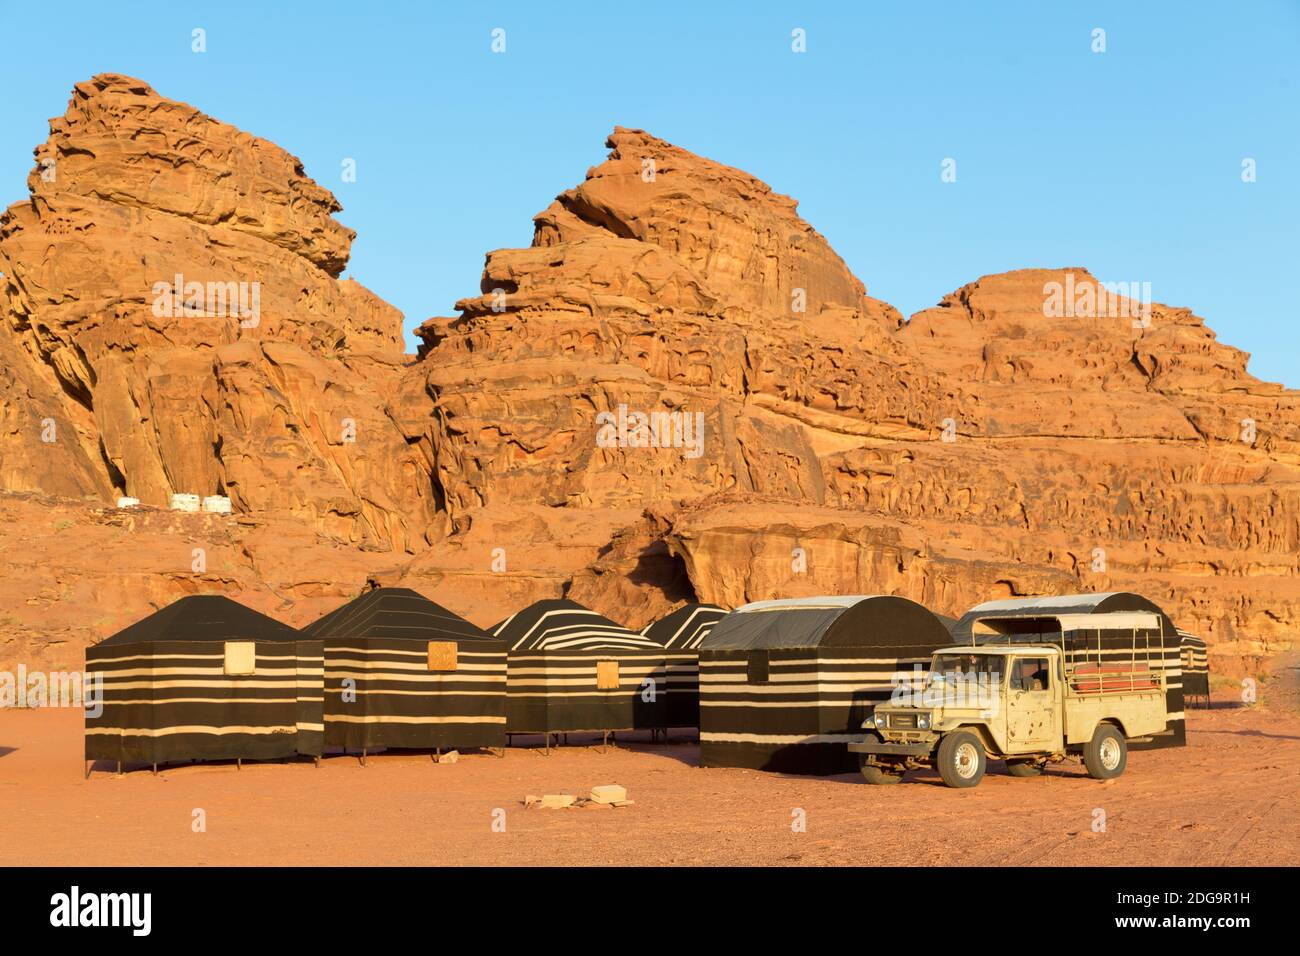 In jordan the desert and the bedouin   tent Stock Photo